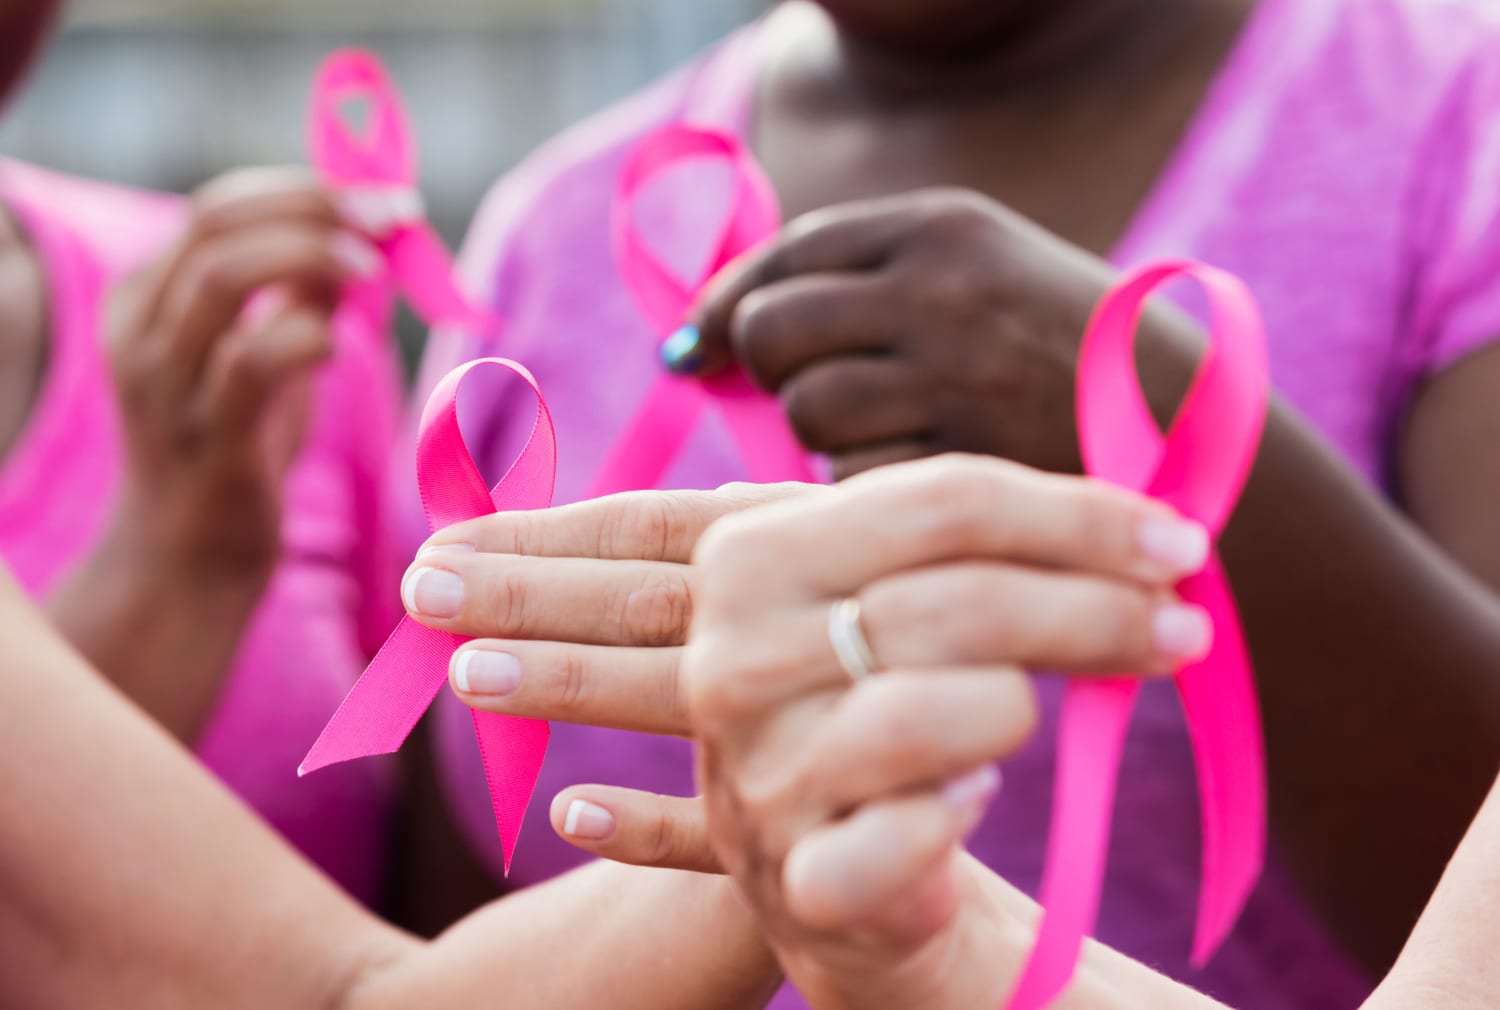 Hot Pink Awareness Ribbons | Lapel Pins